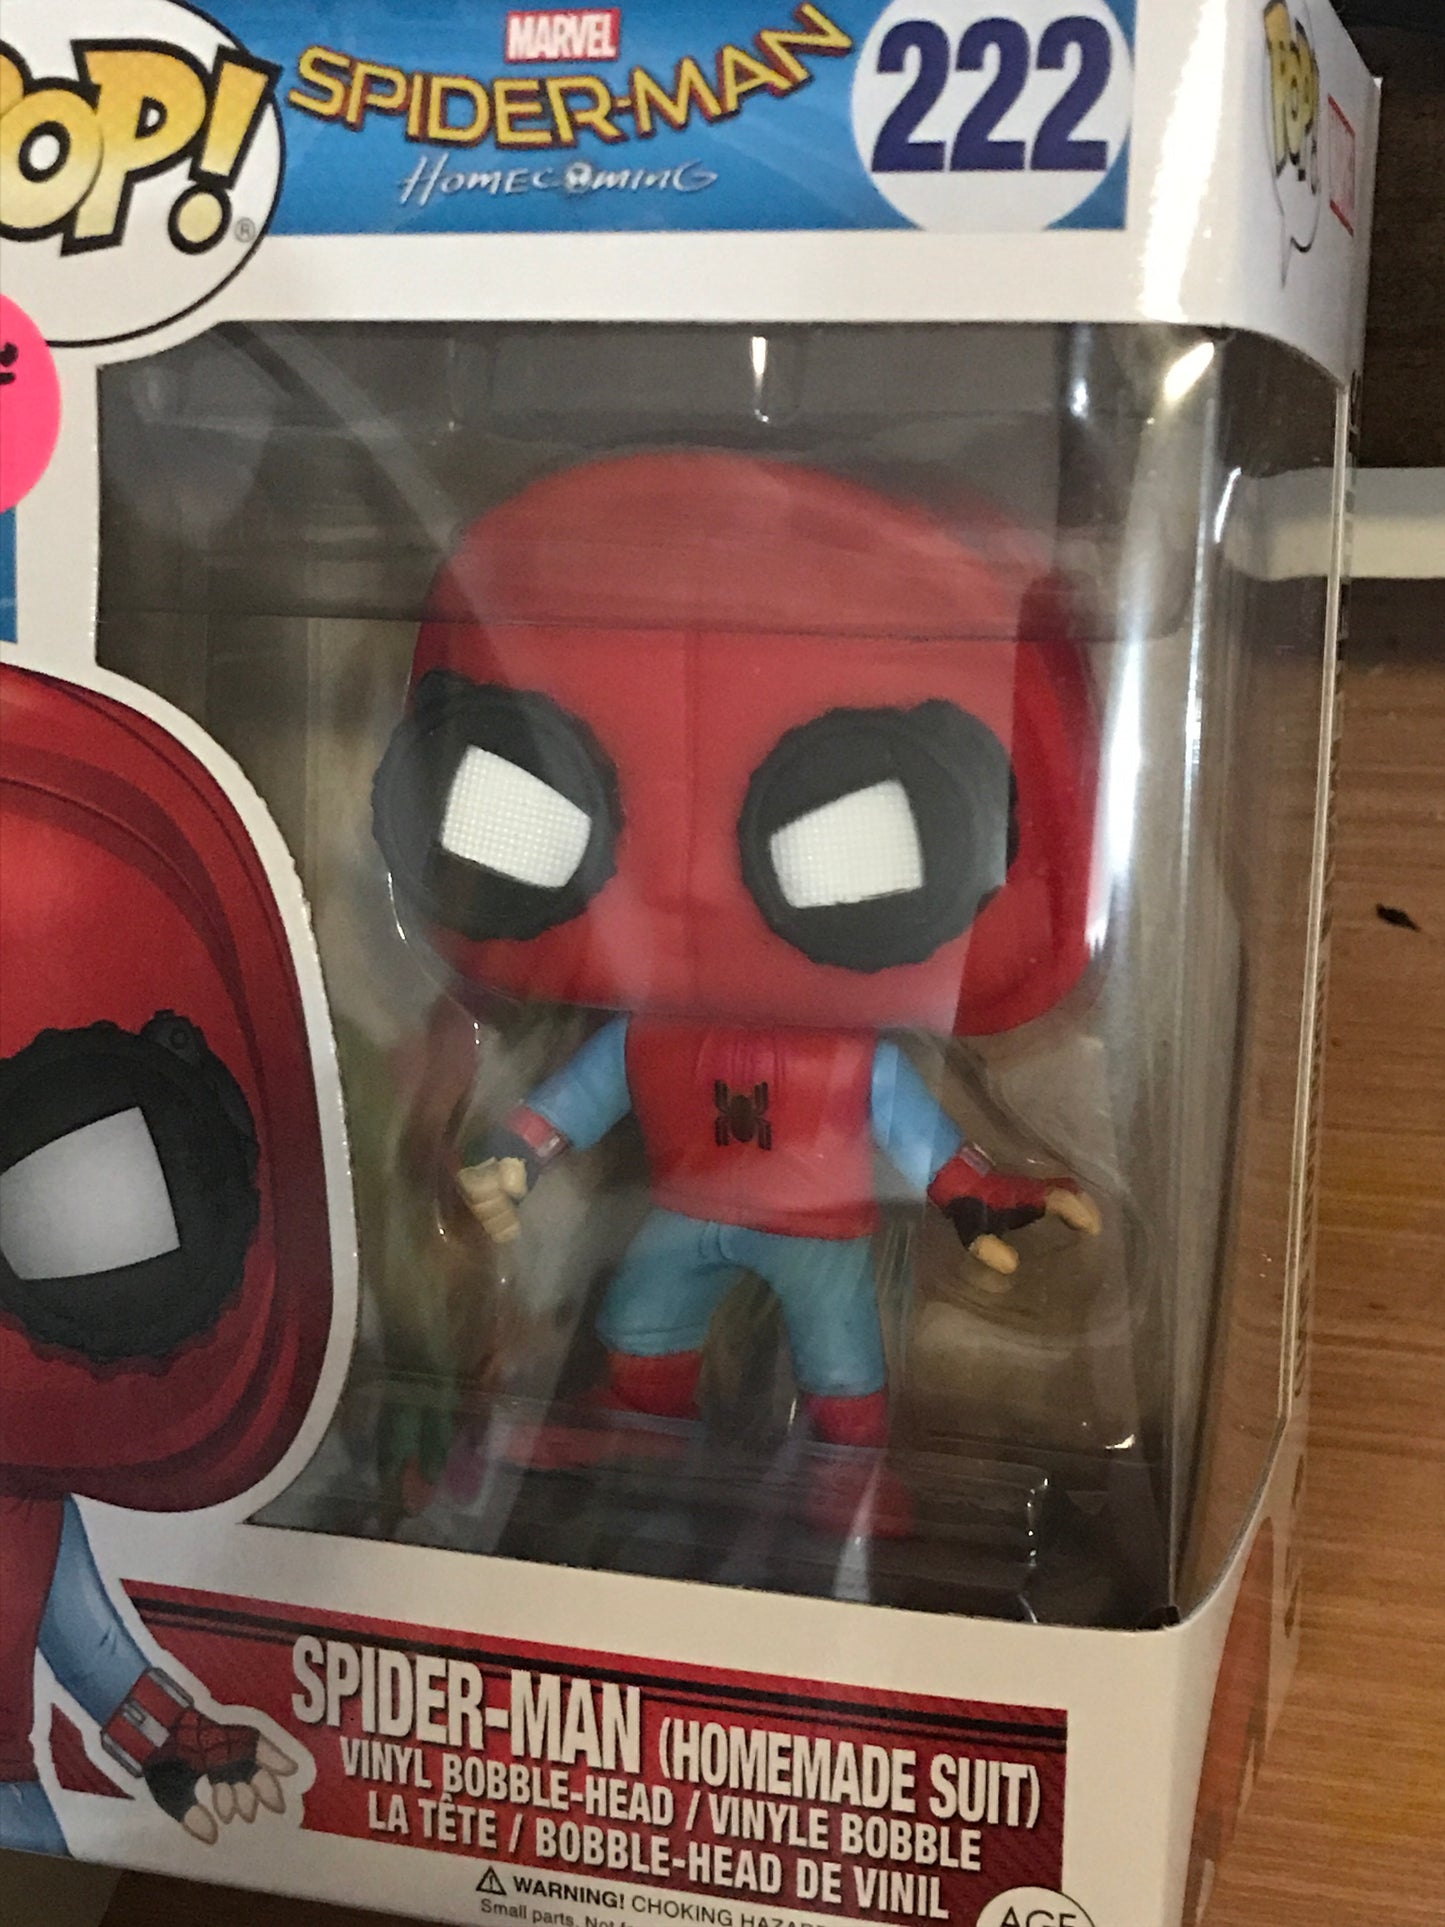 Spider-Man Homemade Suit Homecoming Funko Pop! Vinyl figure 2020